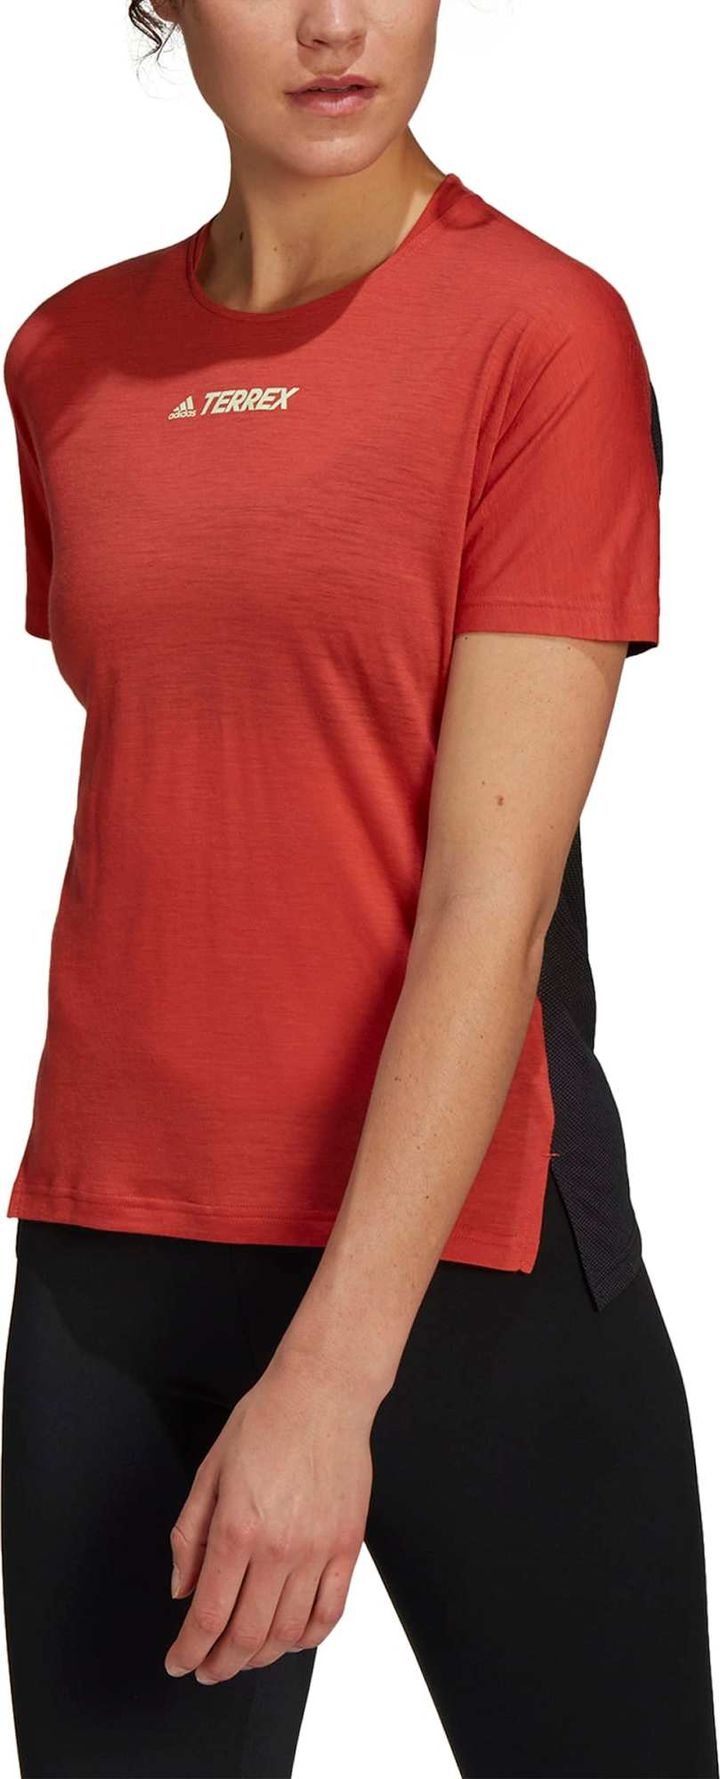 Women's Terrex Agravic Pro Wool T-Shirt Altamb Adidas